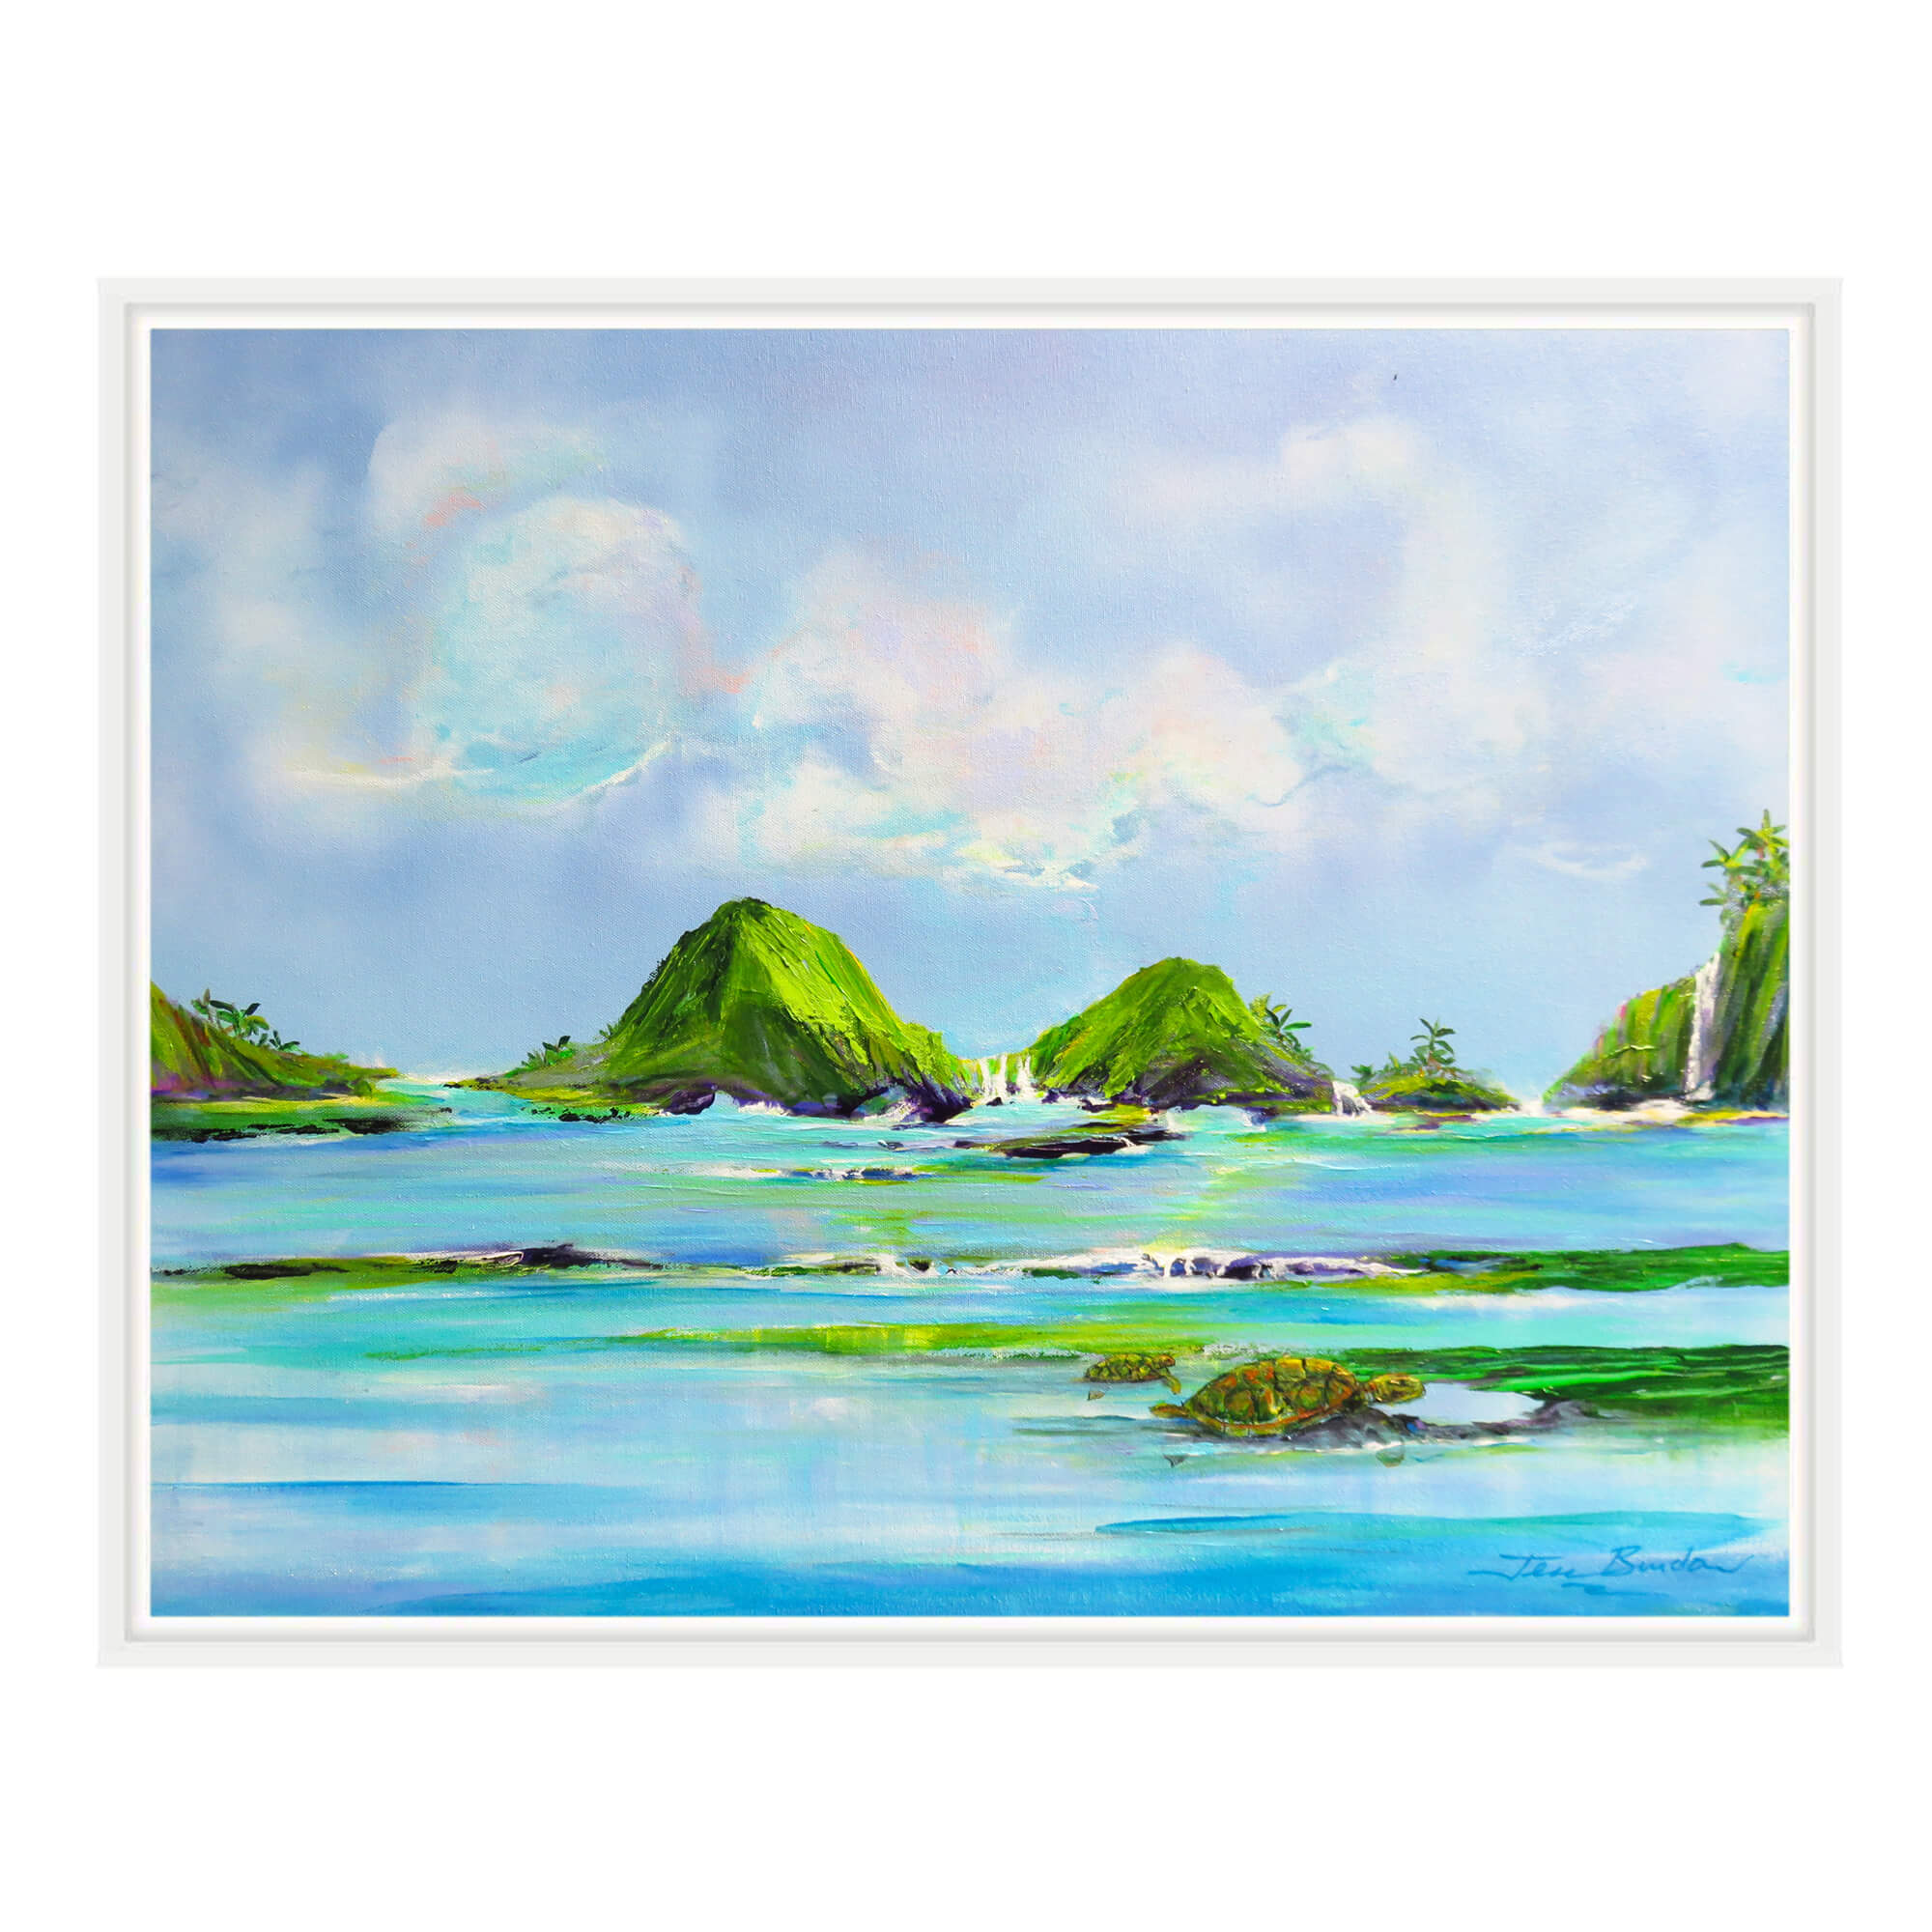 A seascape surrounded by rocks by Hawaii artist Jess Burda